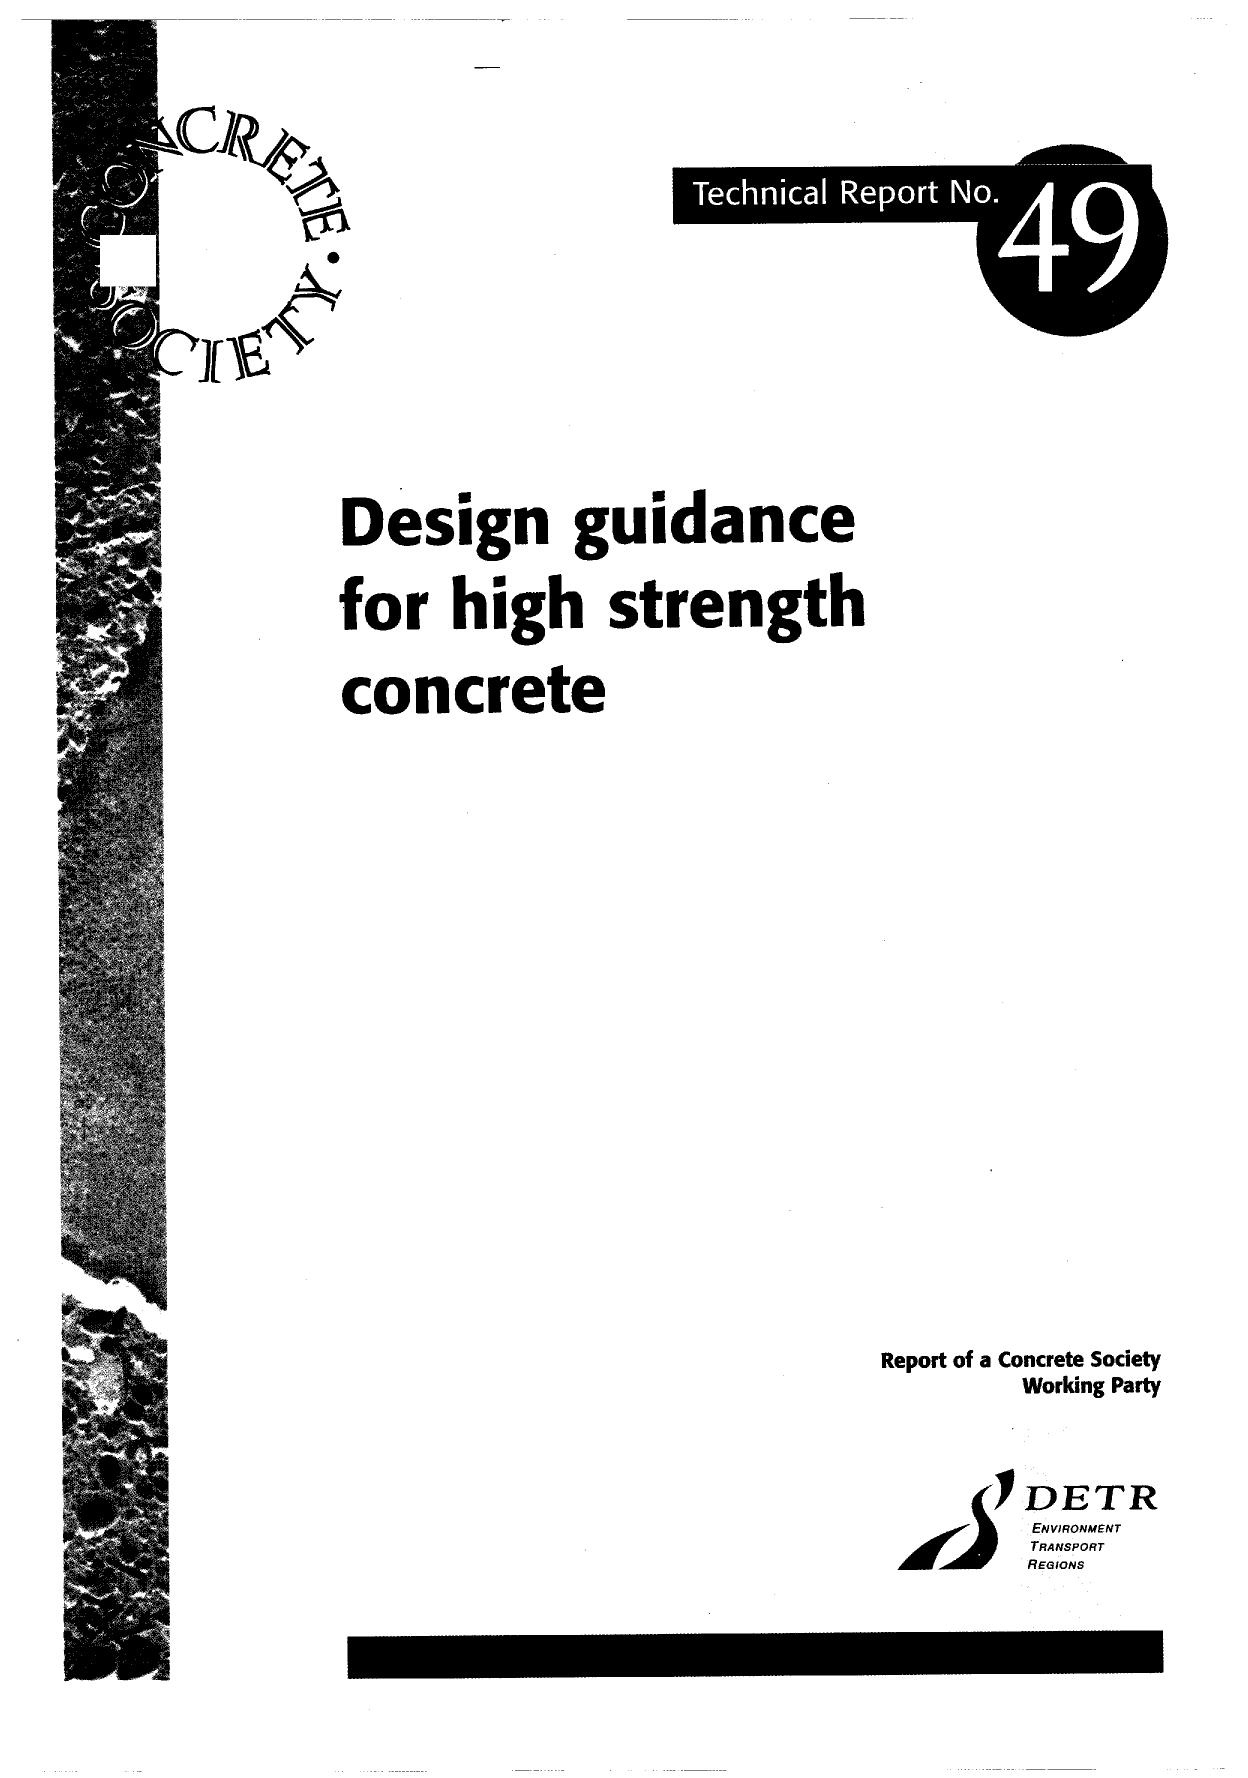 Design guidance for high strength concrete